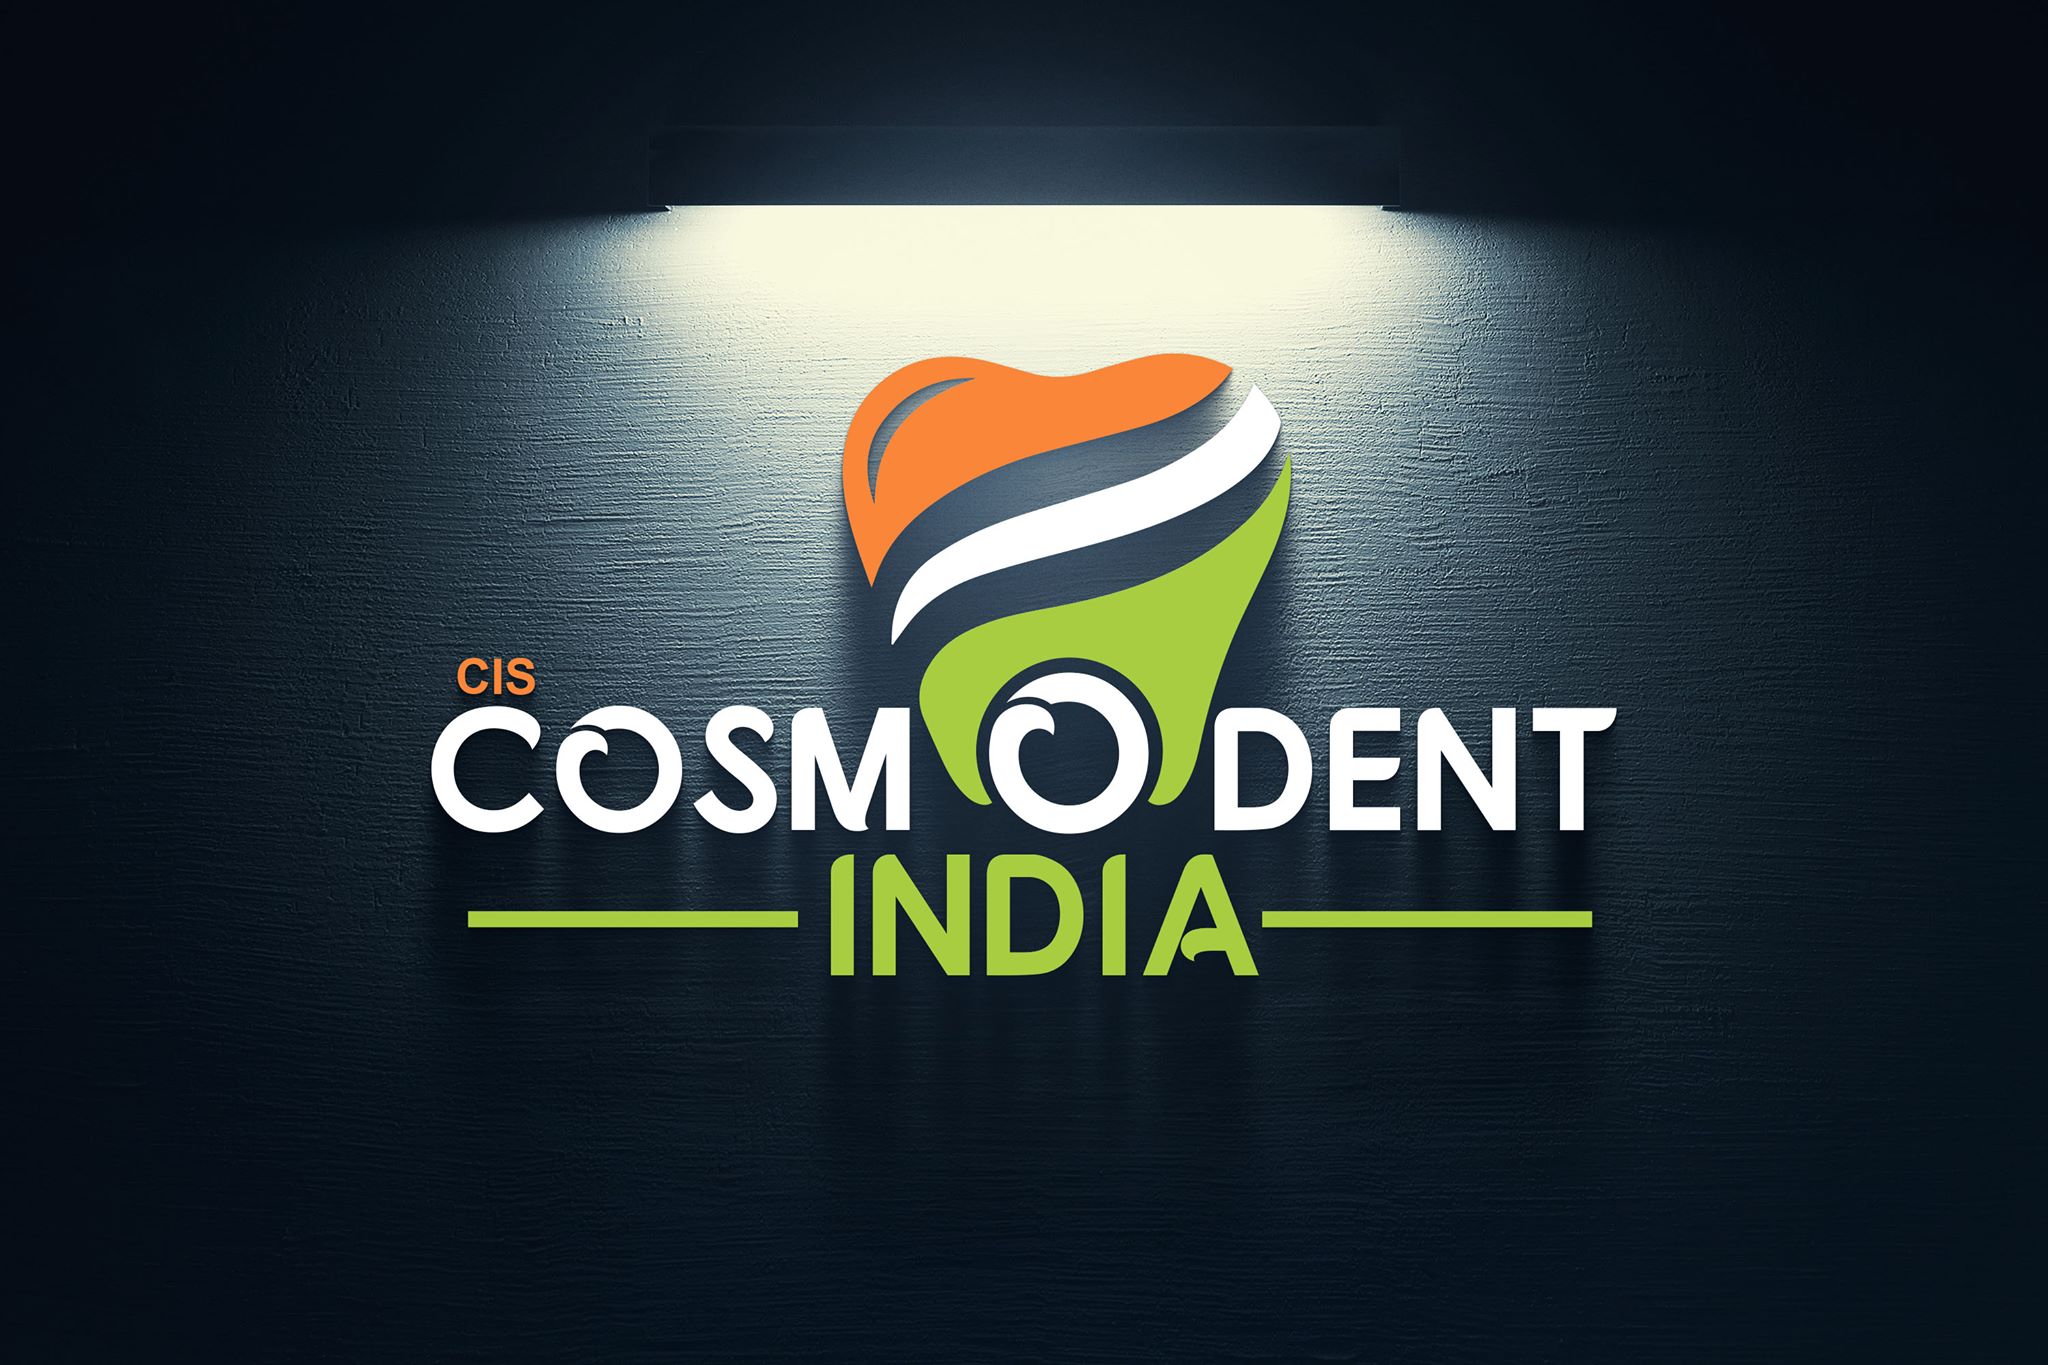 Cosmodent India - Delhi|Diagnostic centre|Medical Services